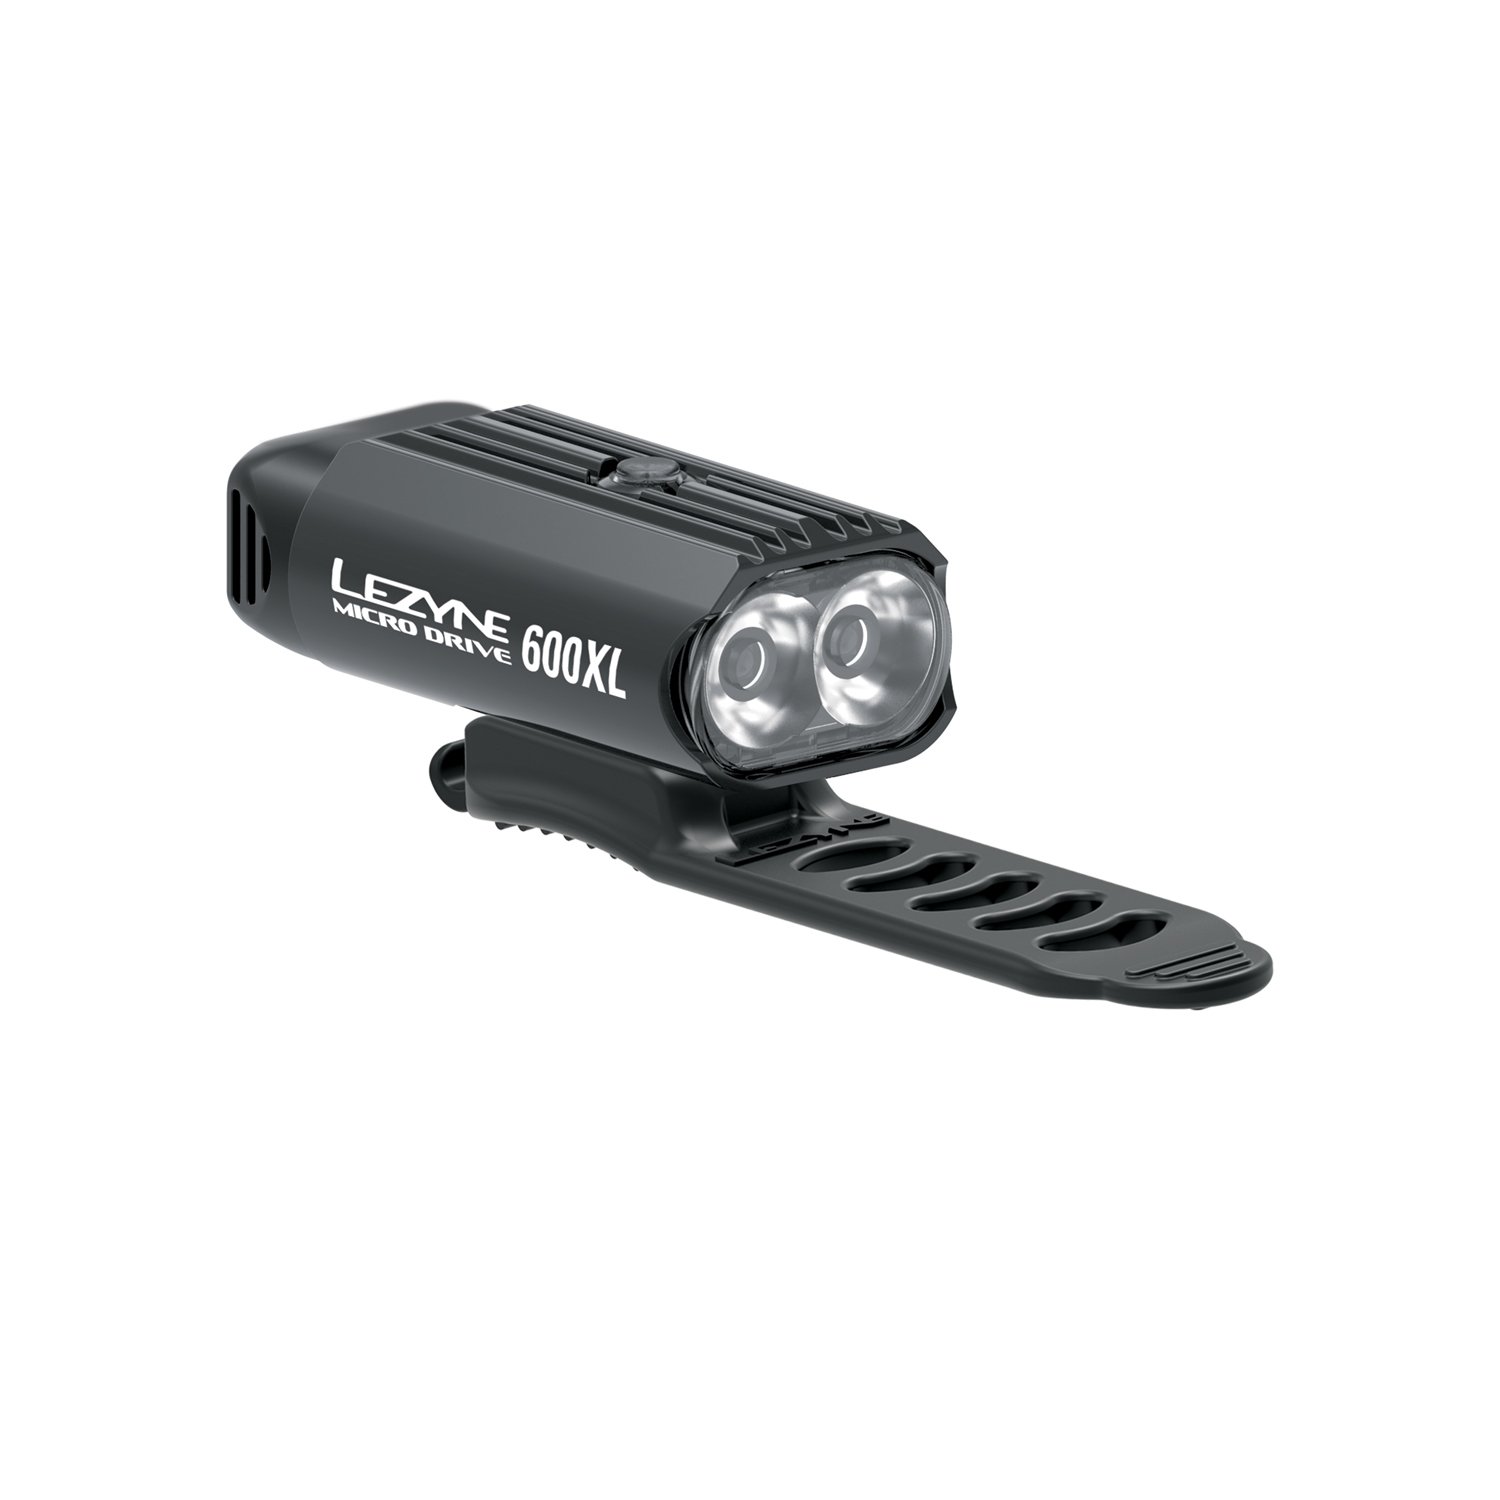 LUMIERE LEZYNE LED MICRO DRIVE 600 XL